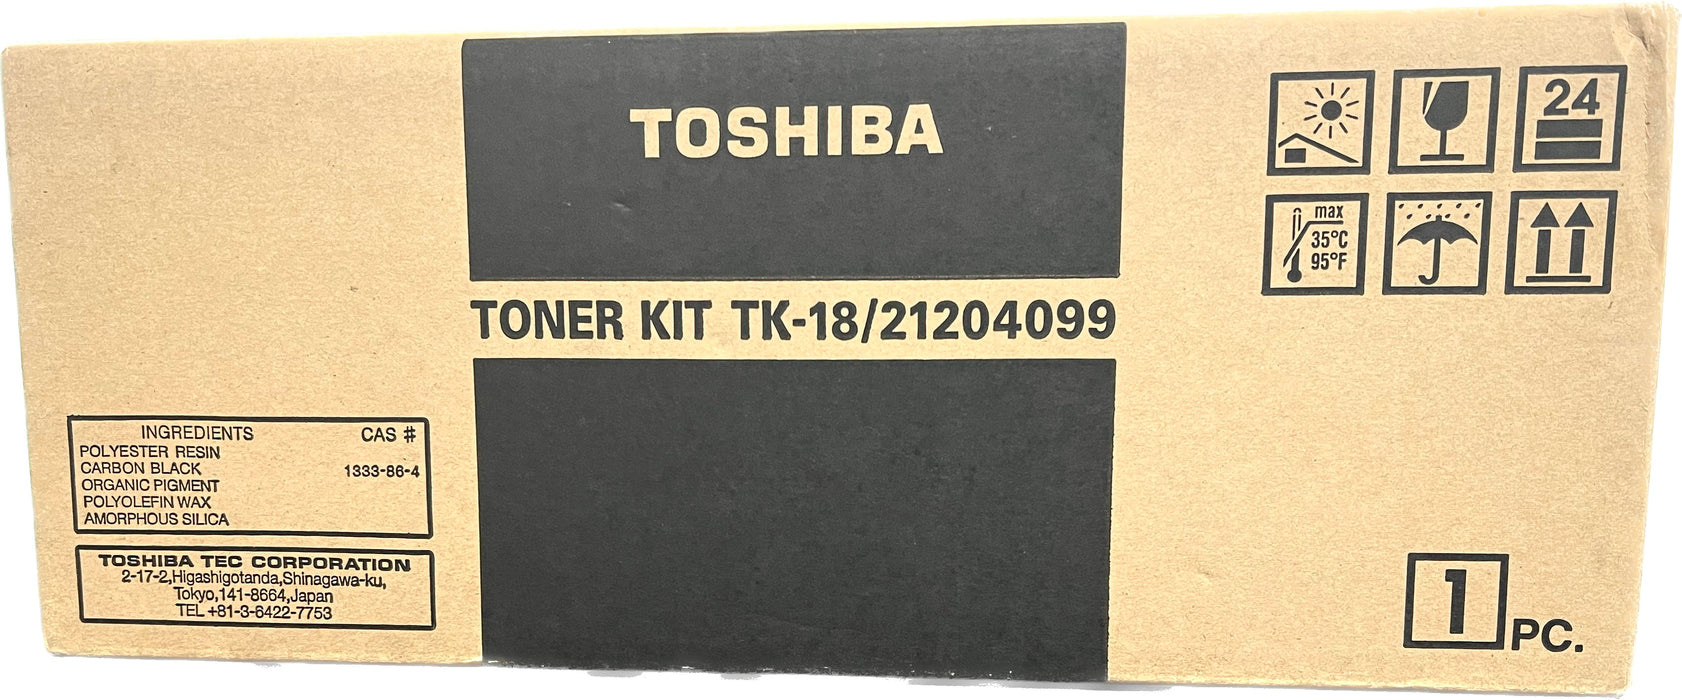 Genuine Toshiba Black Toner | 21204099 | TK-18